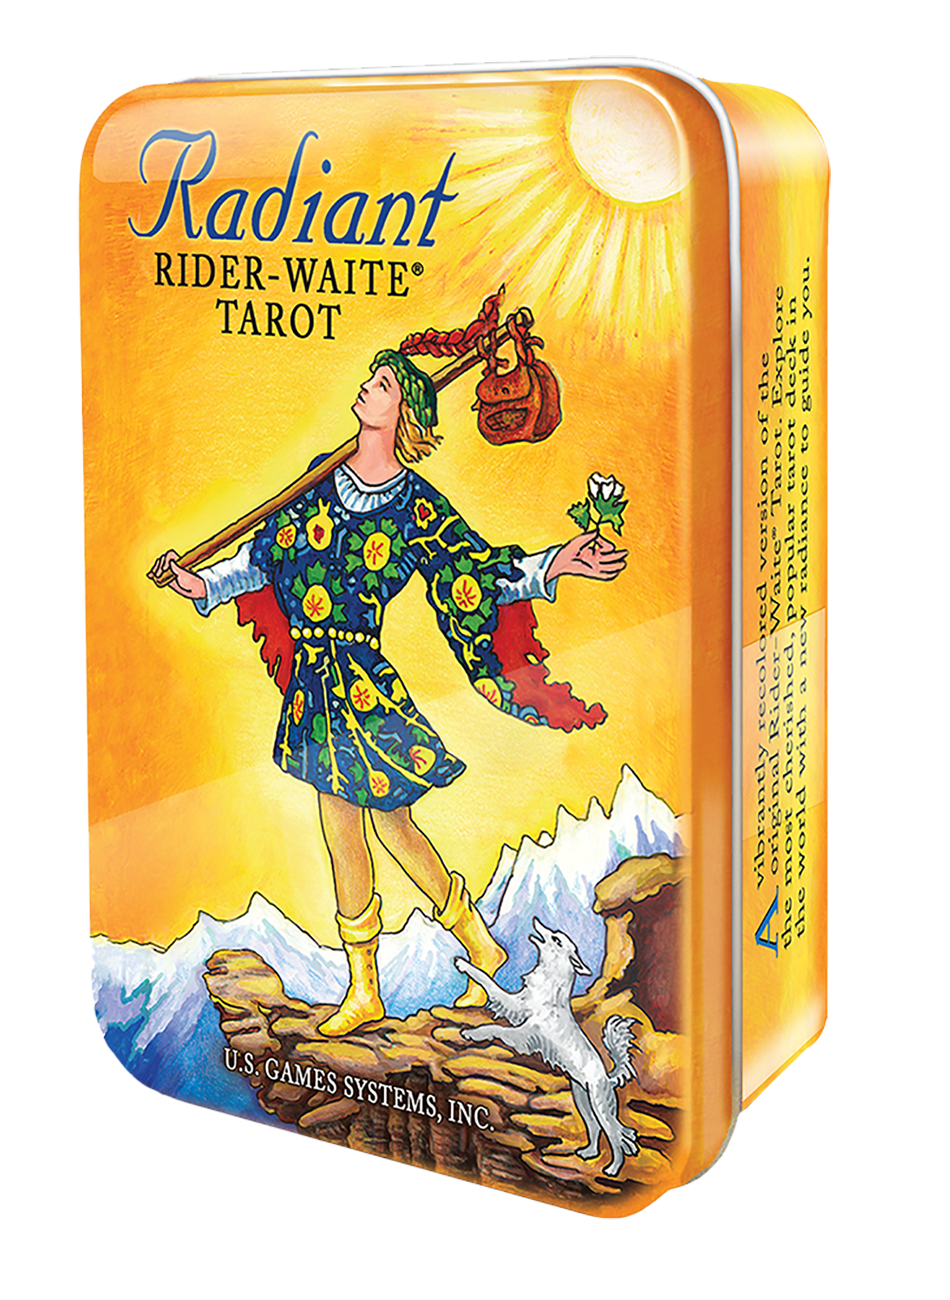 Radiant Rider-Waite Tarot Deck in a Tin